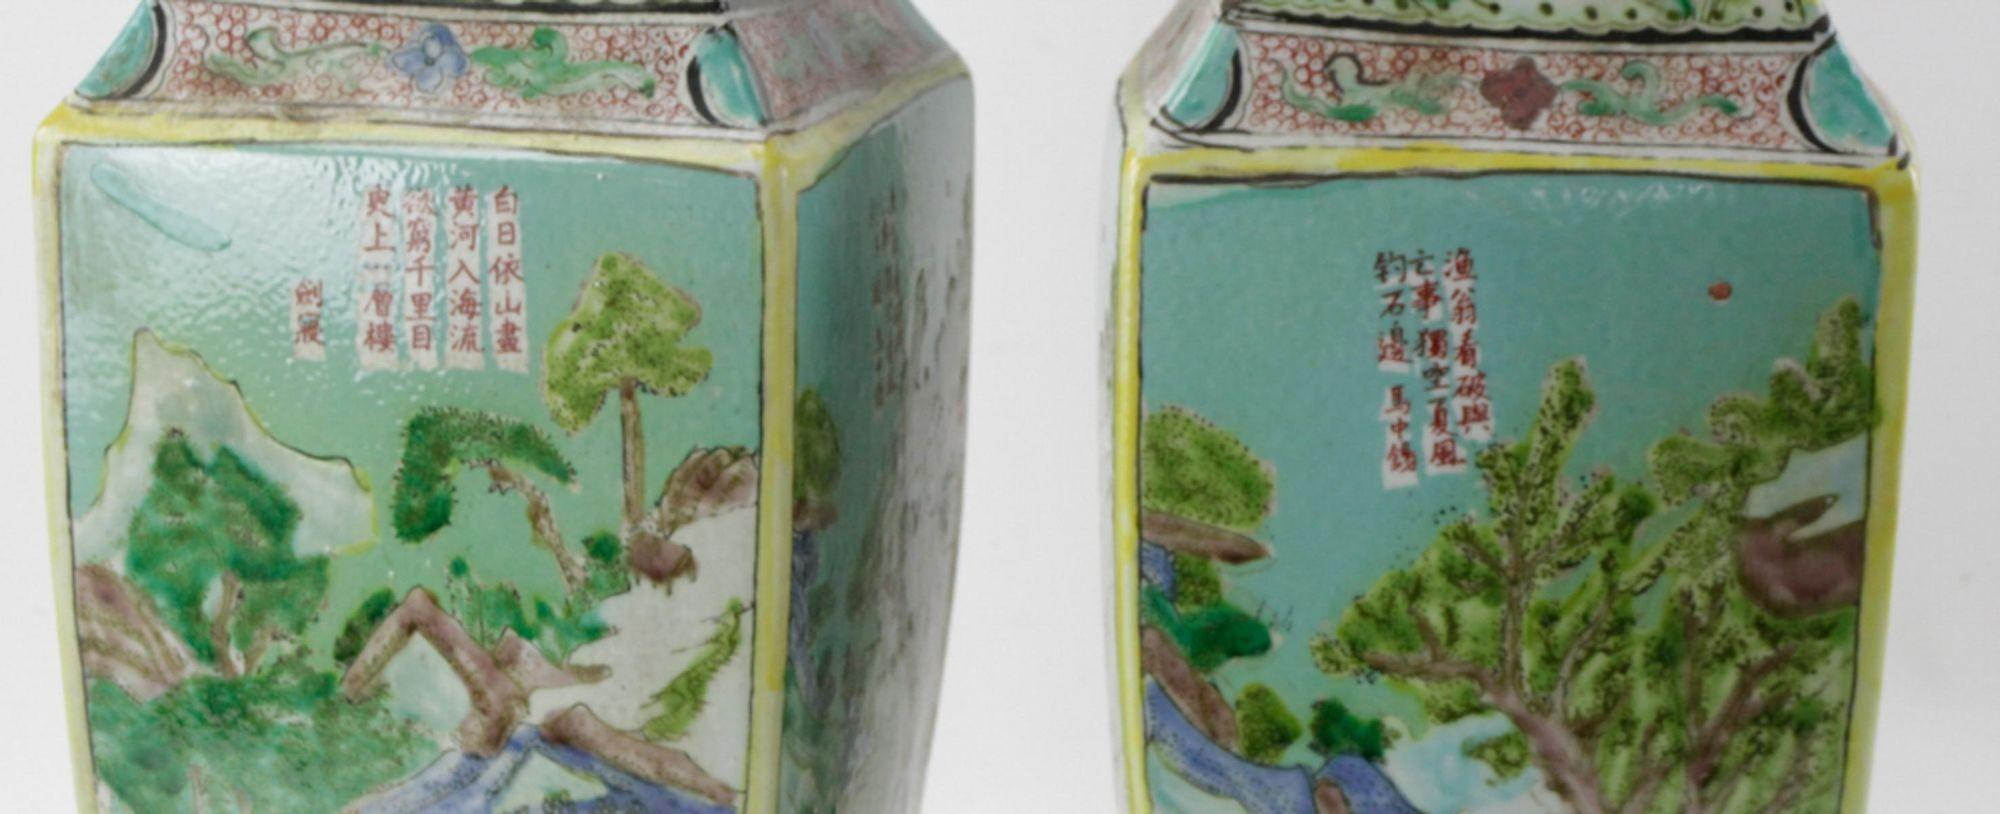 Pair of Chinese Porcelain Famille Verte Vases, c. 1900's For Sale 1